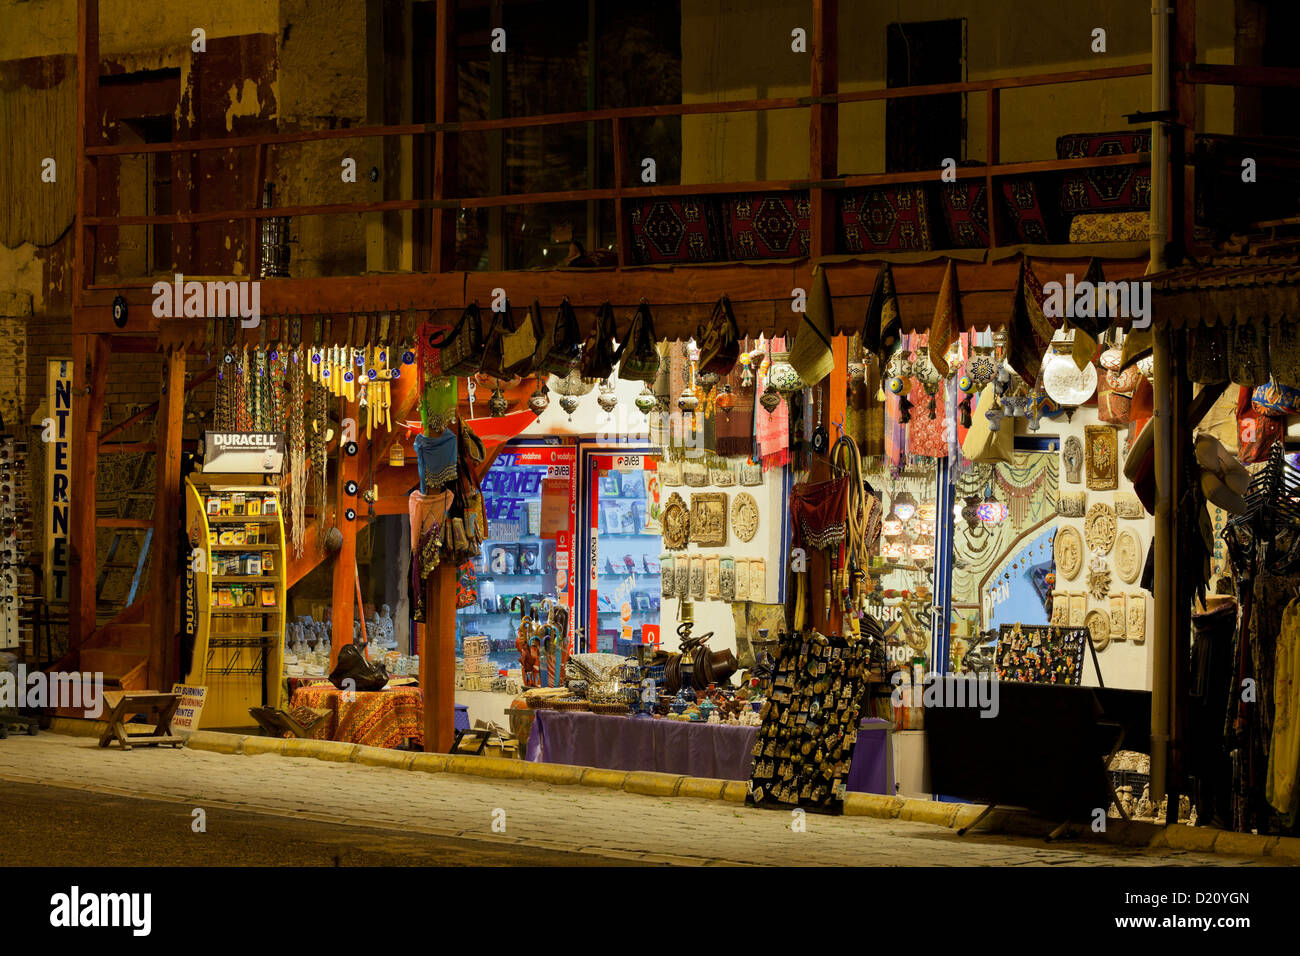 Illuminated display of a shop, Goereme, Anatolia, Cappadocia, Turkey Stock Photo